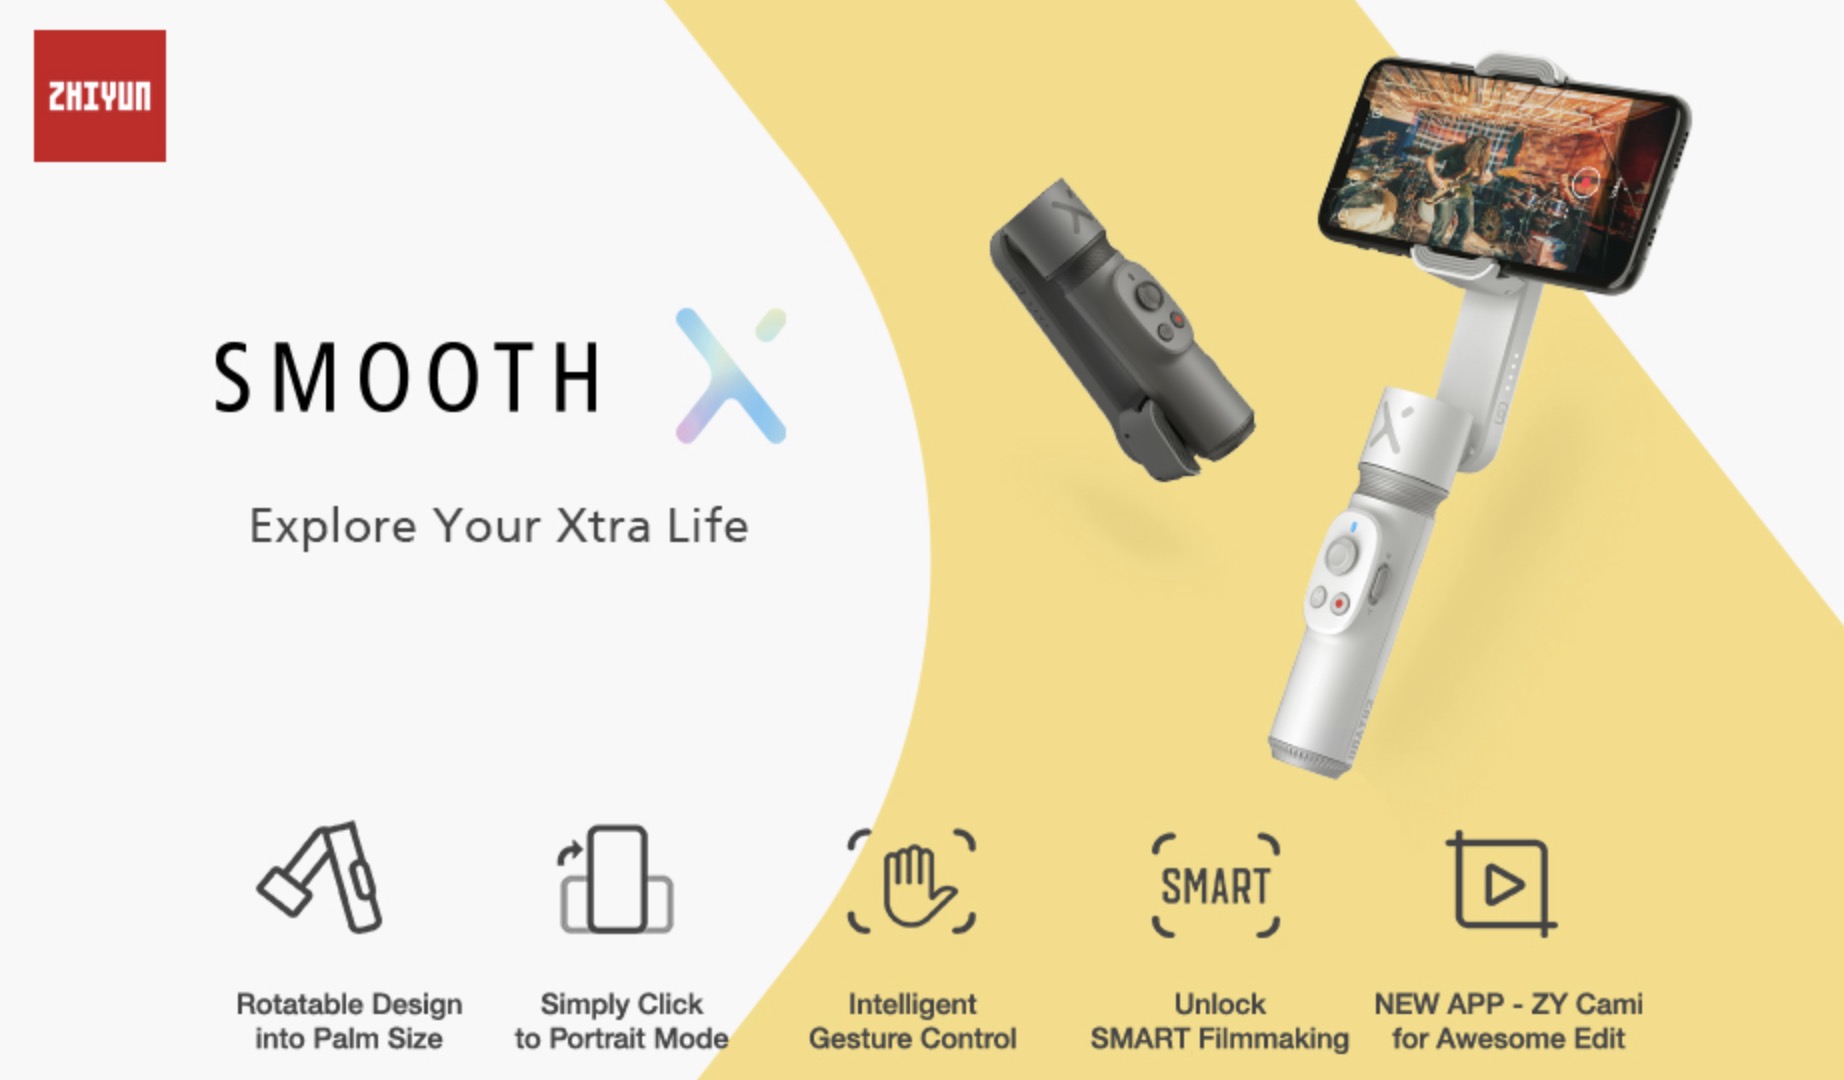 jual Zhiyun Smooth X 2 Axis Gimbal Stabilizer Smartphone harga spesifikasi 